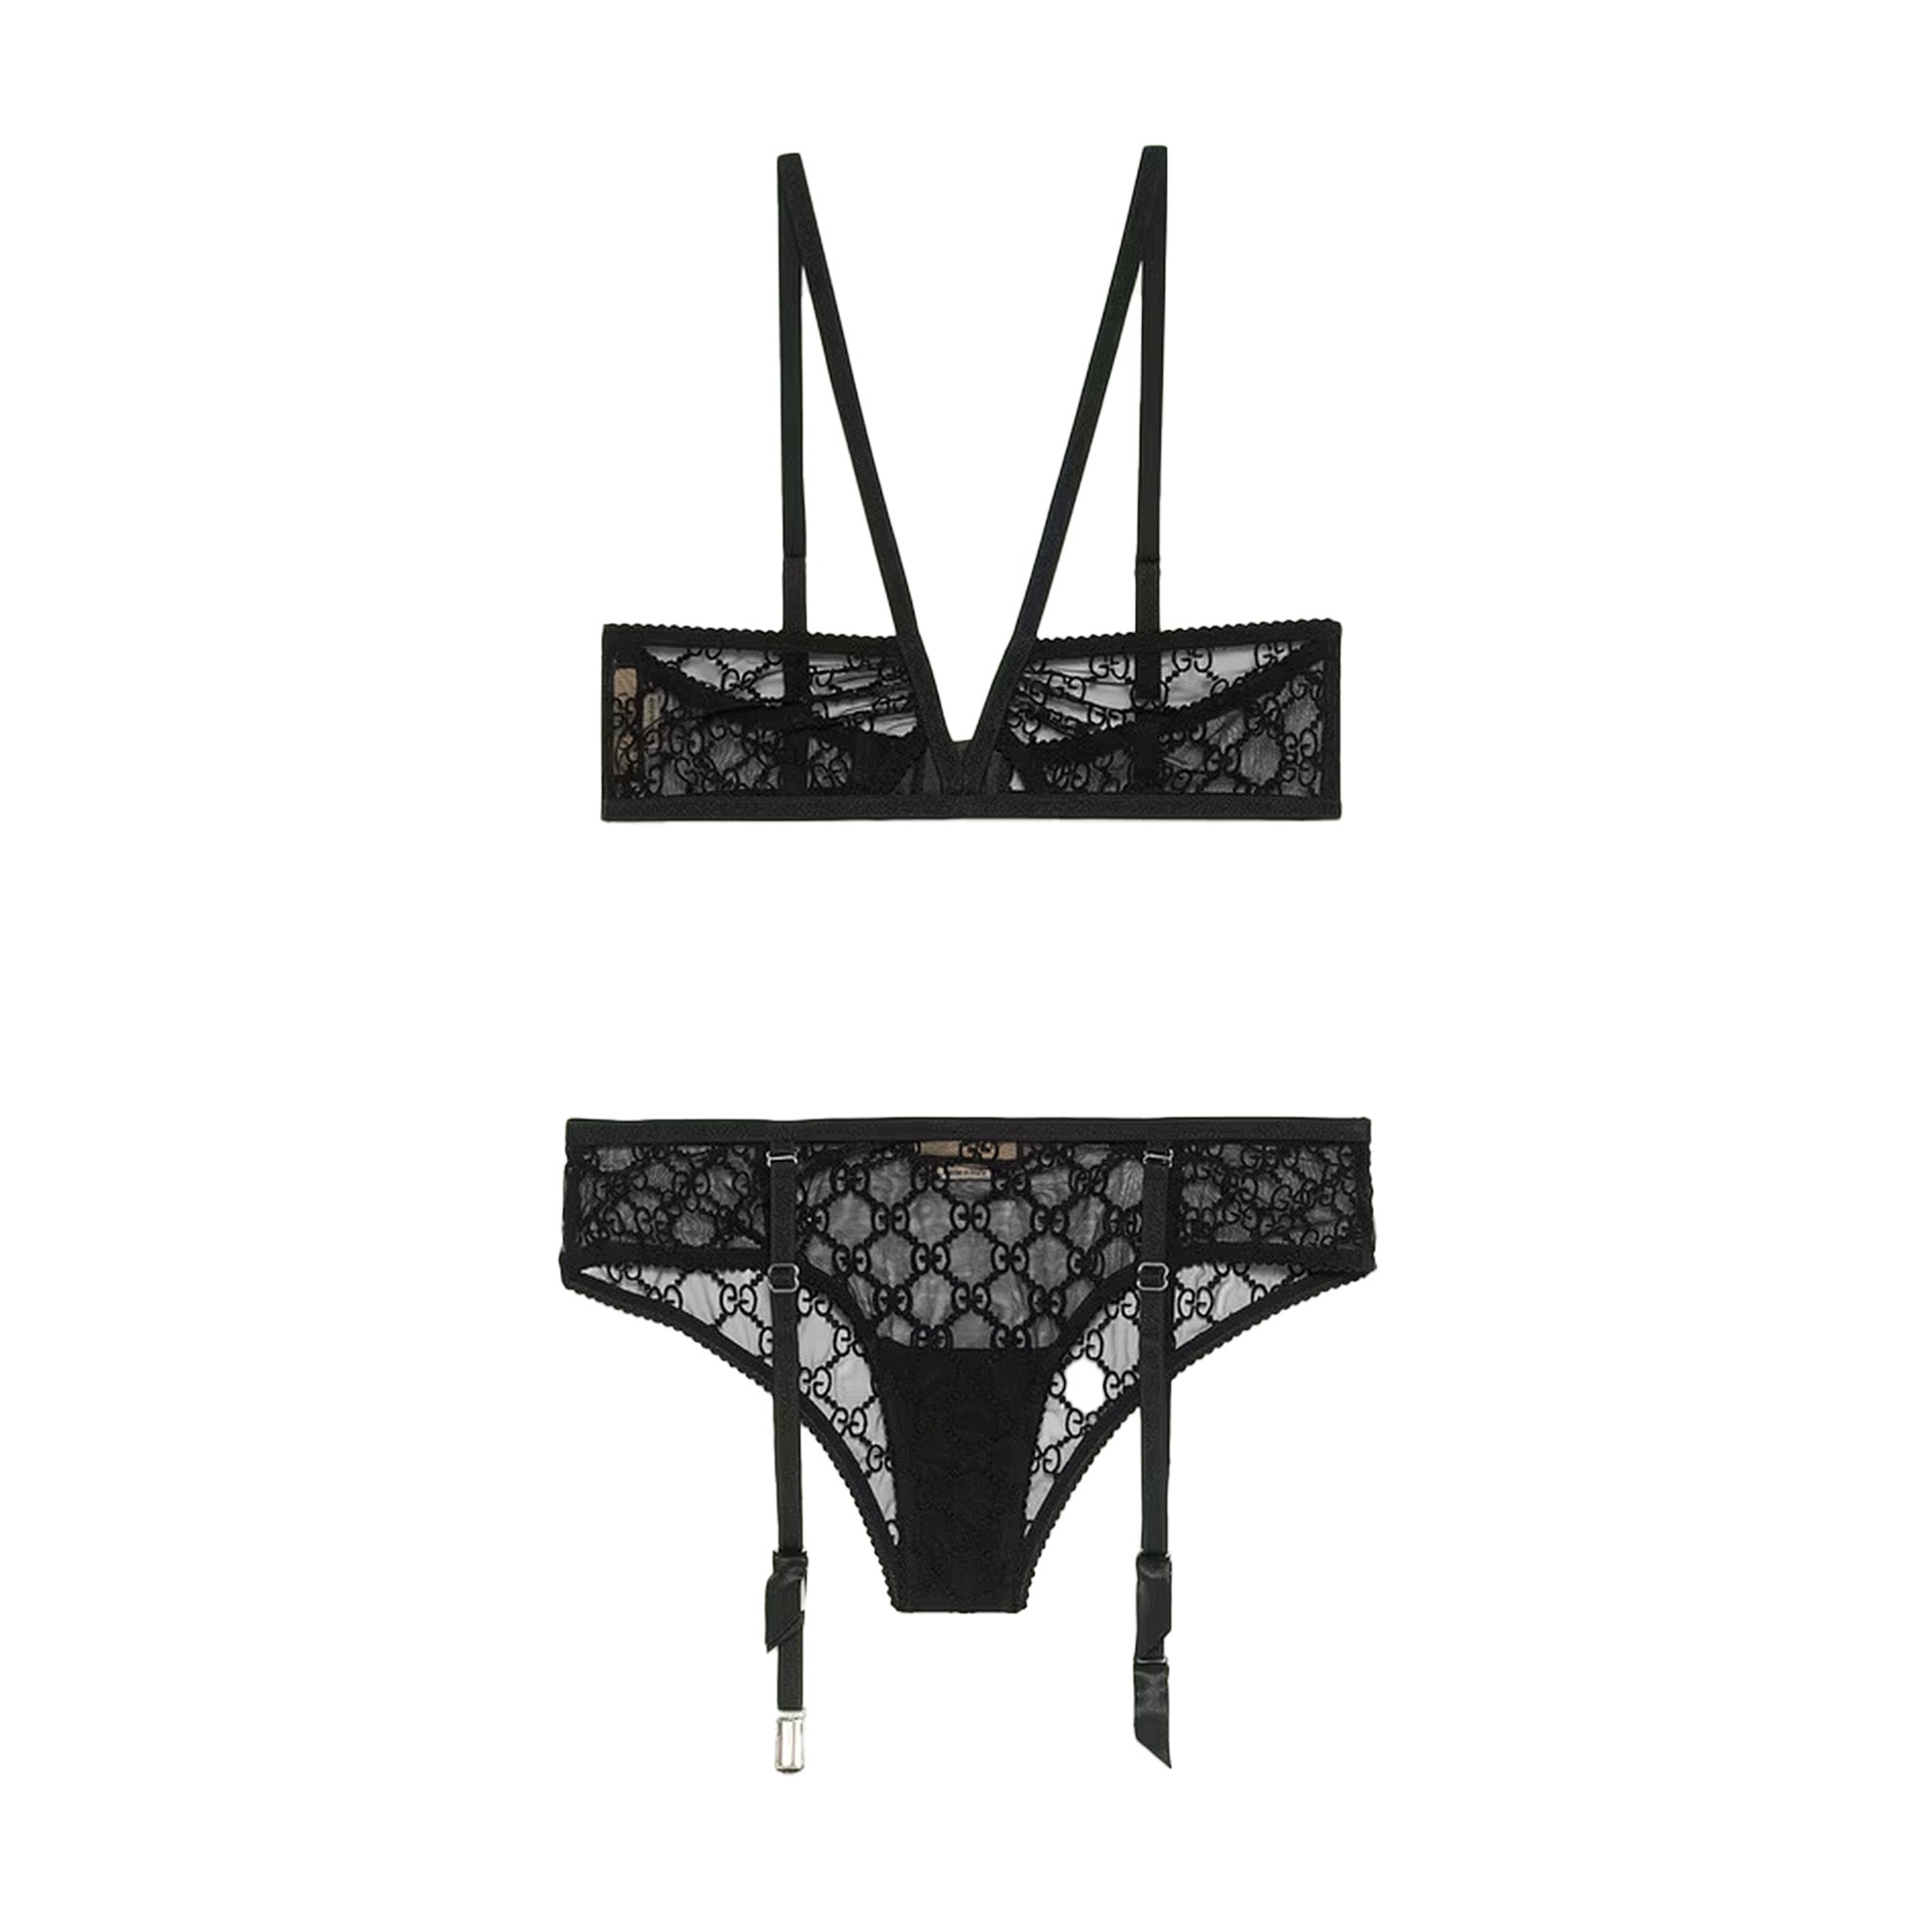 Gucci Gg Embroidery Lingerie Set, Woman Underwear Black M